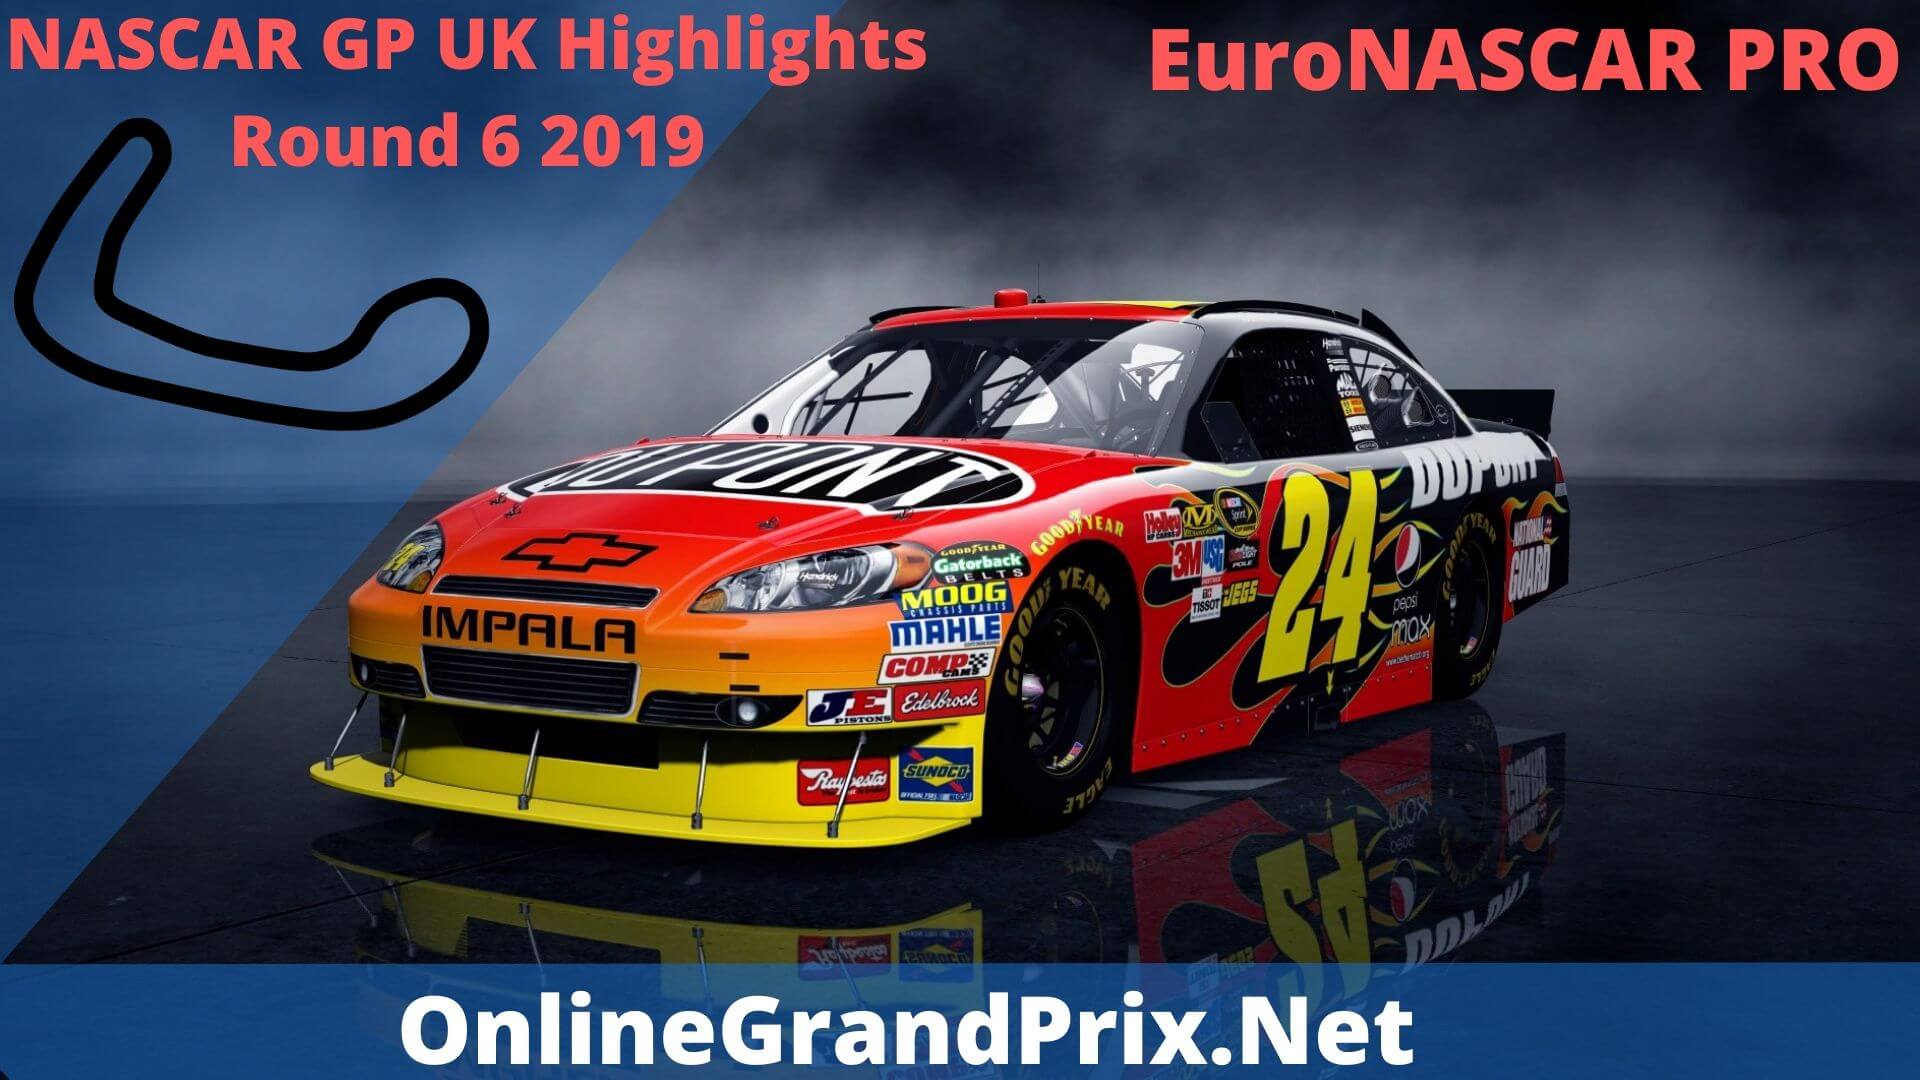 NASCAR GP UK Round 6 Highlights 2019